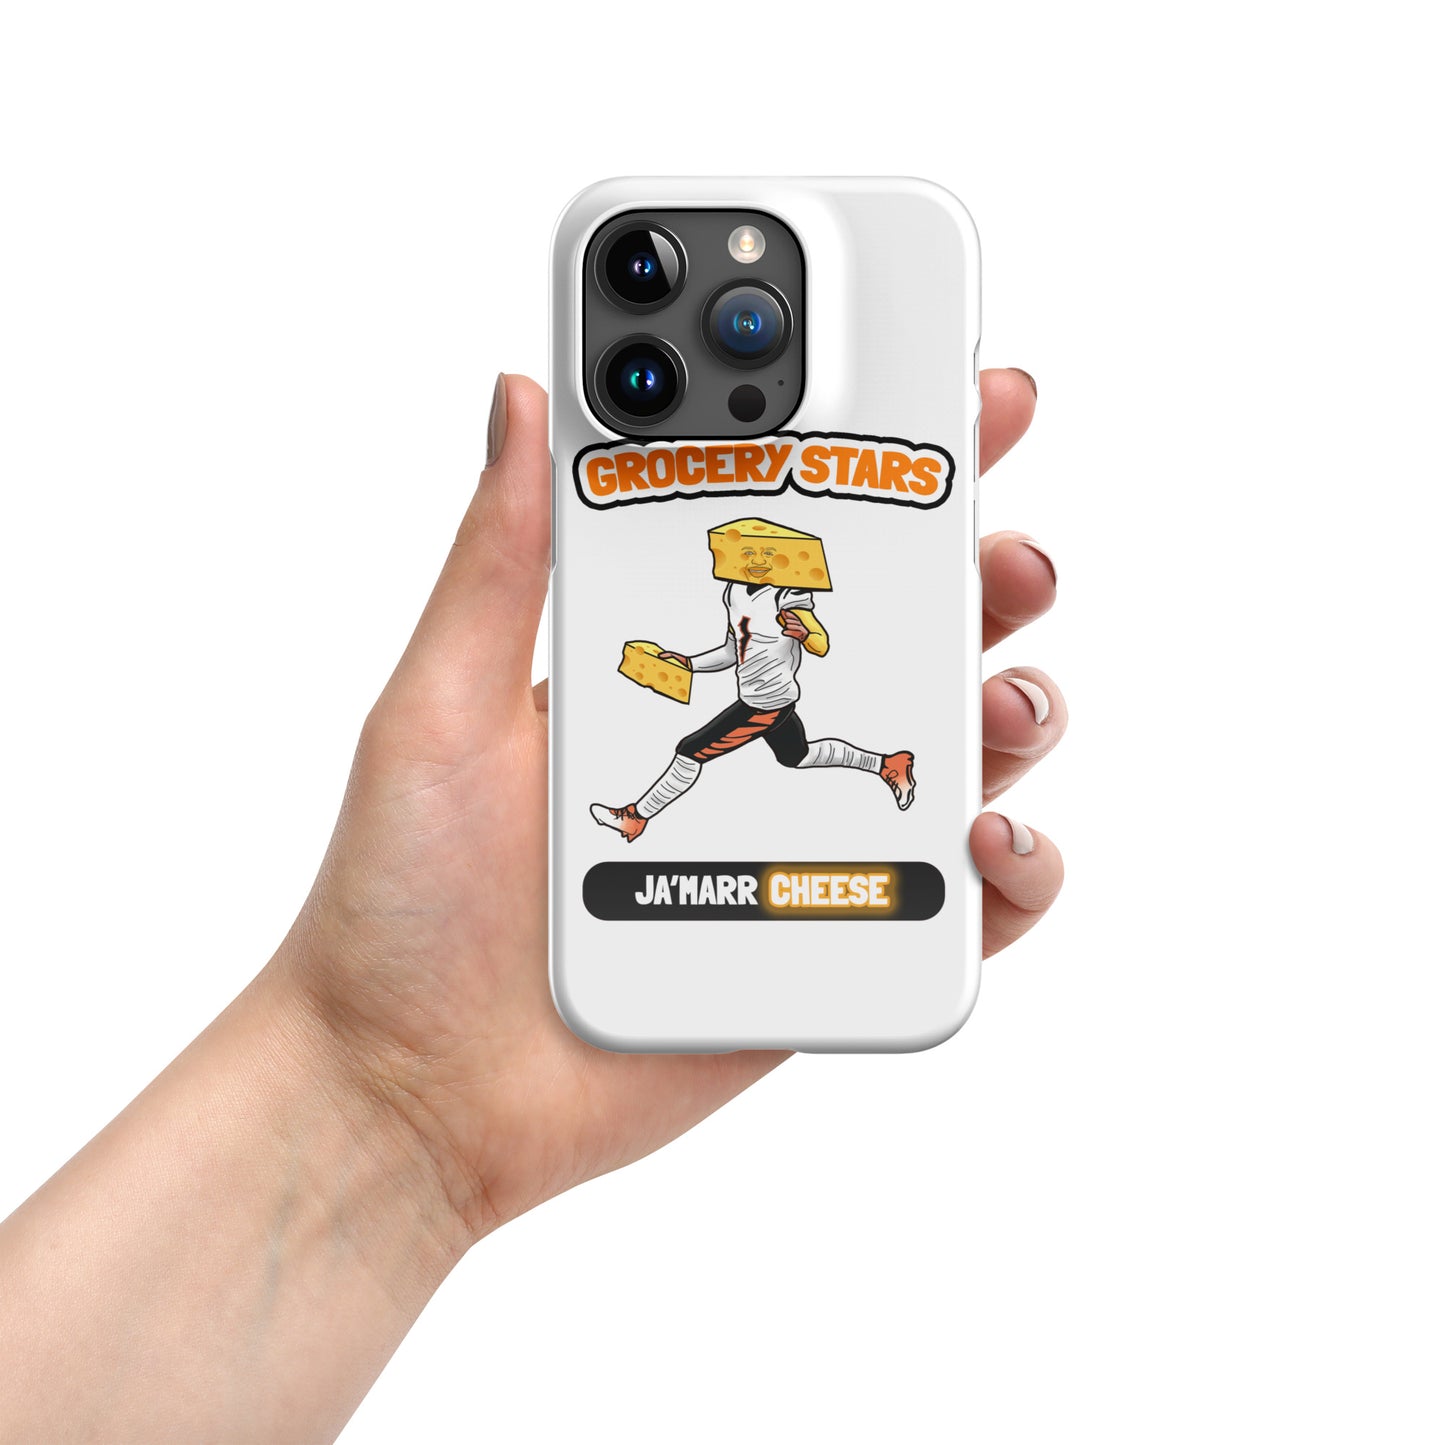 Ja'Marr Cheese - iPhone Case®